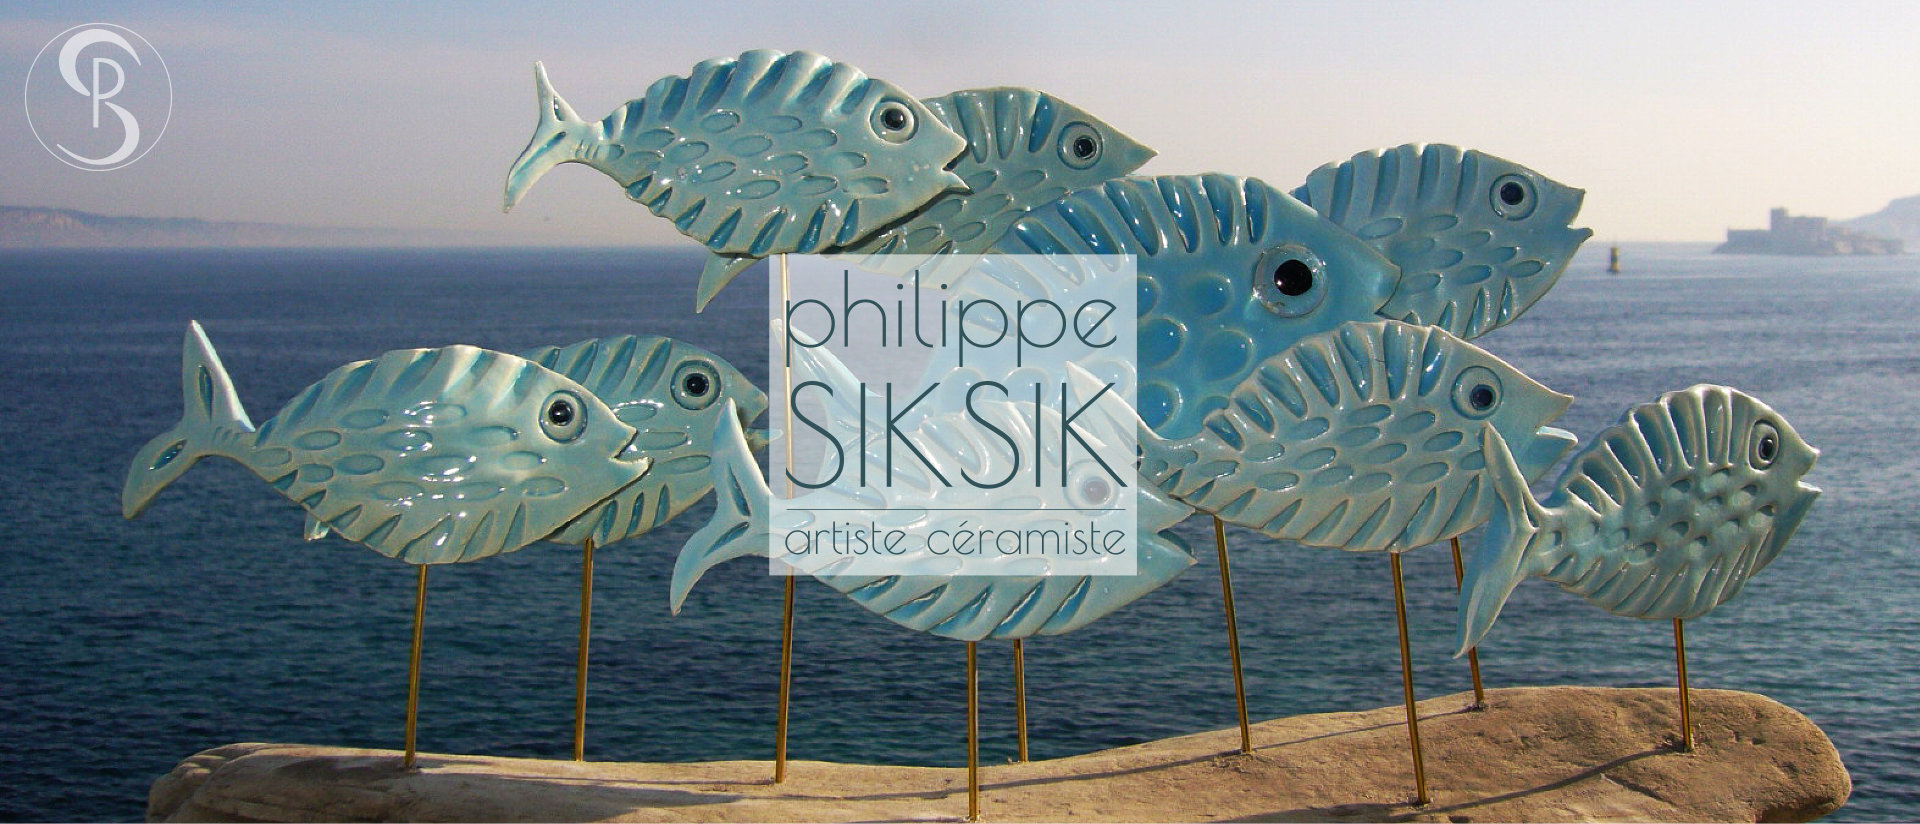 Philippe Siksik artiste ceramiste